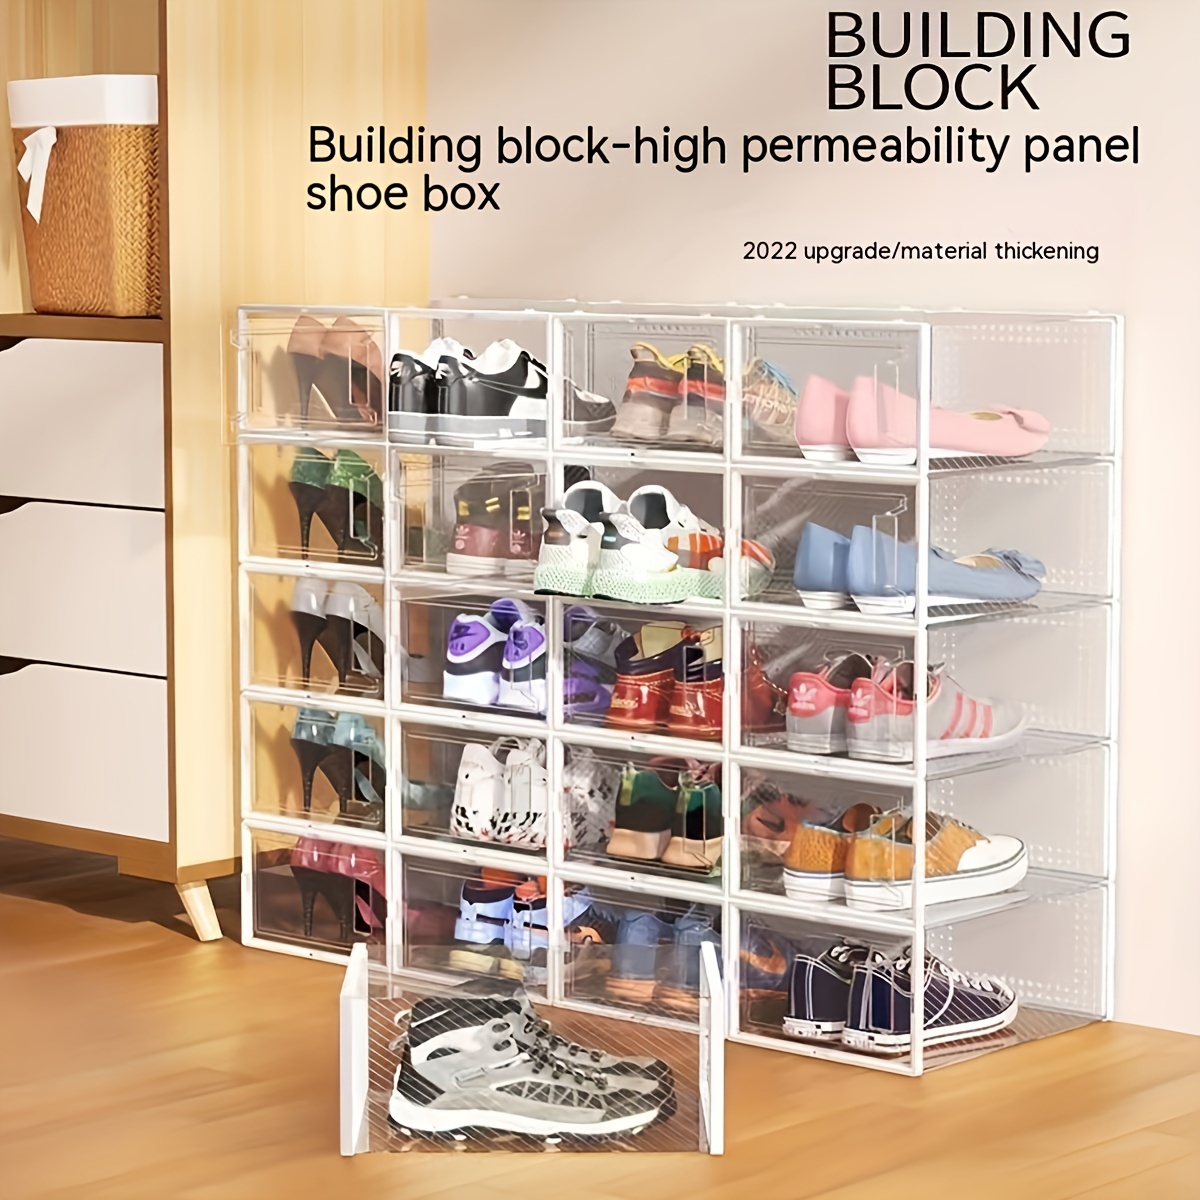 

Versatile Transparent Shoe Box With Door - Perfect For Living Room, Bedroom, Dorm Organization | Durable Plastic, Rectangular Design